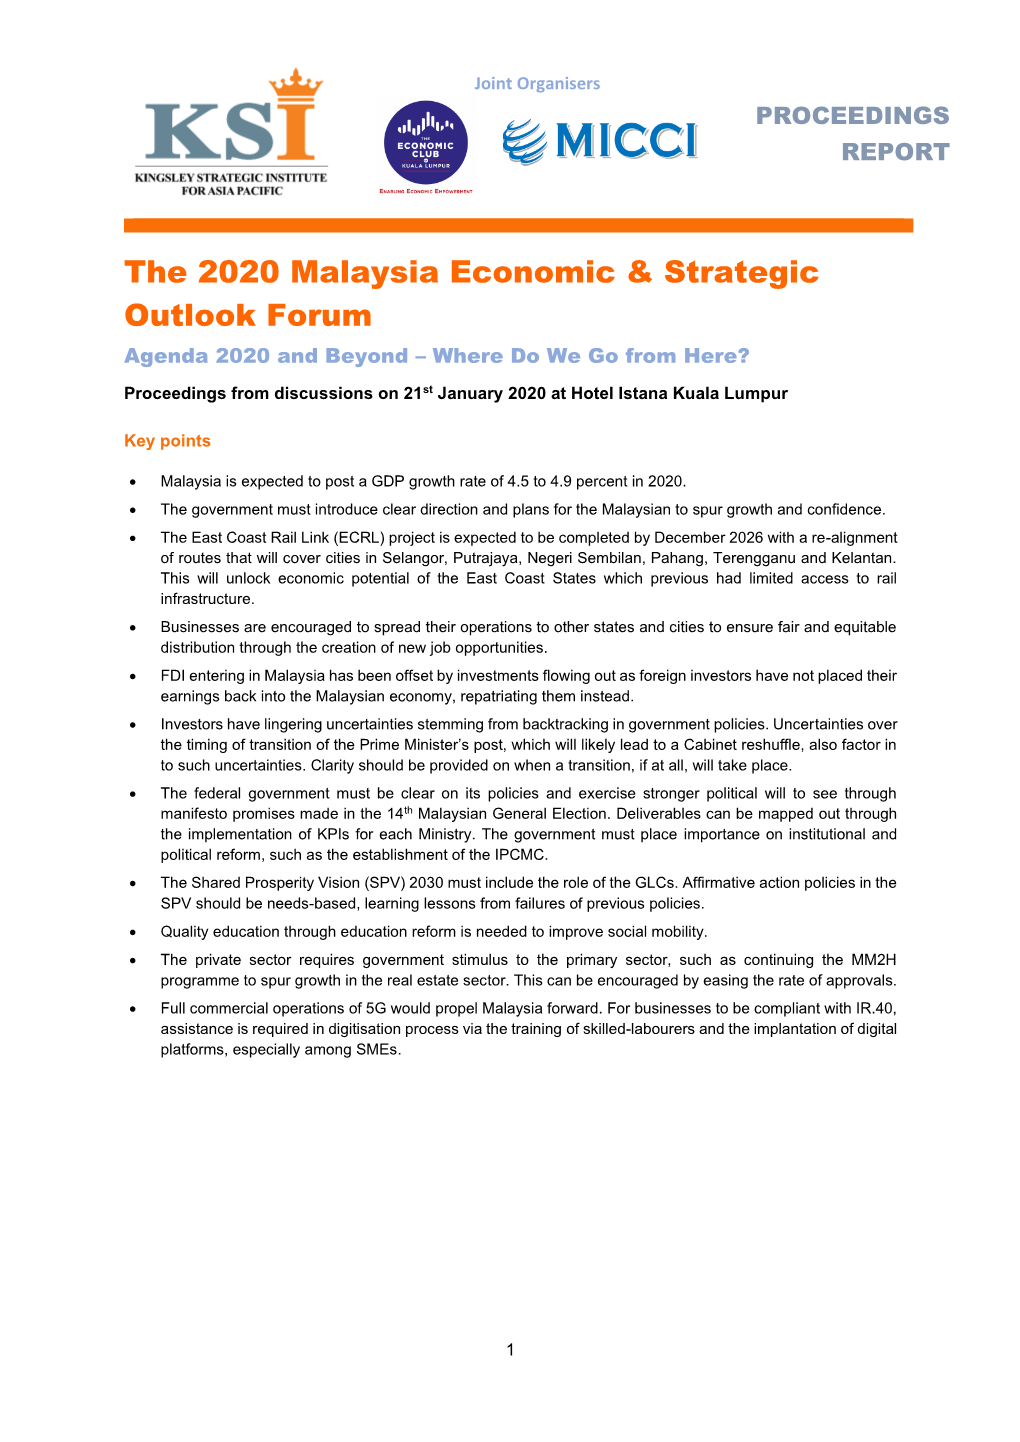 The 2020 Malaysia Economic & Strategic Outlook Forum